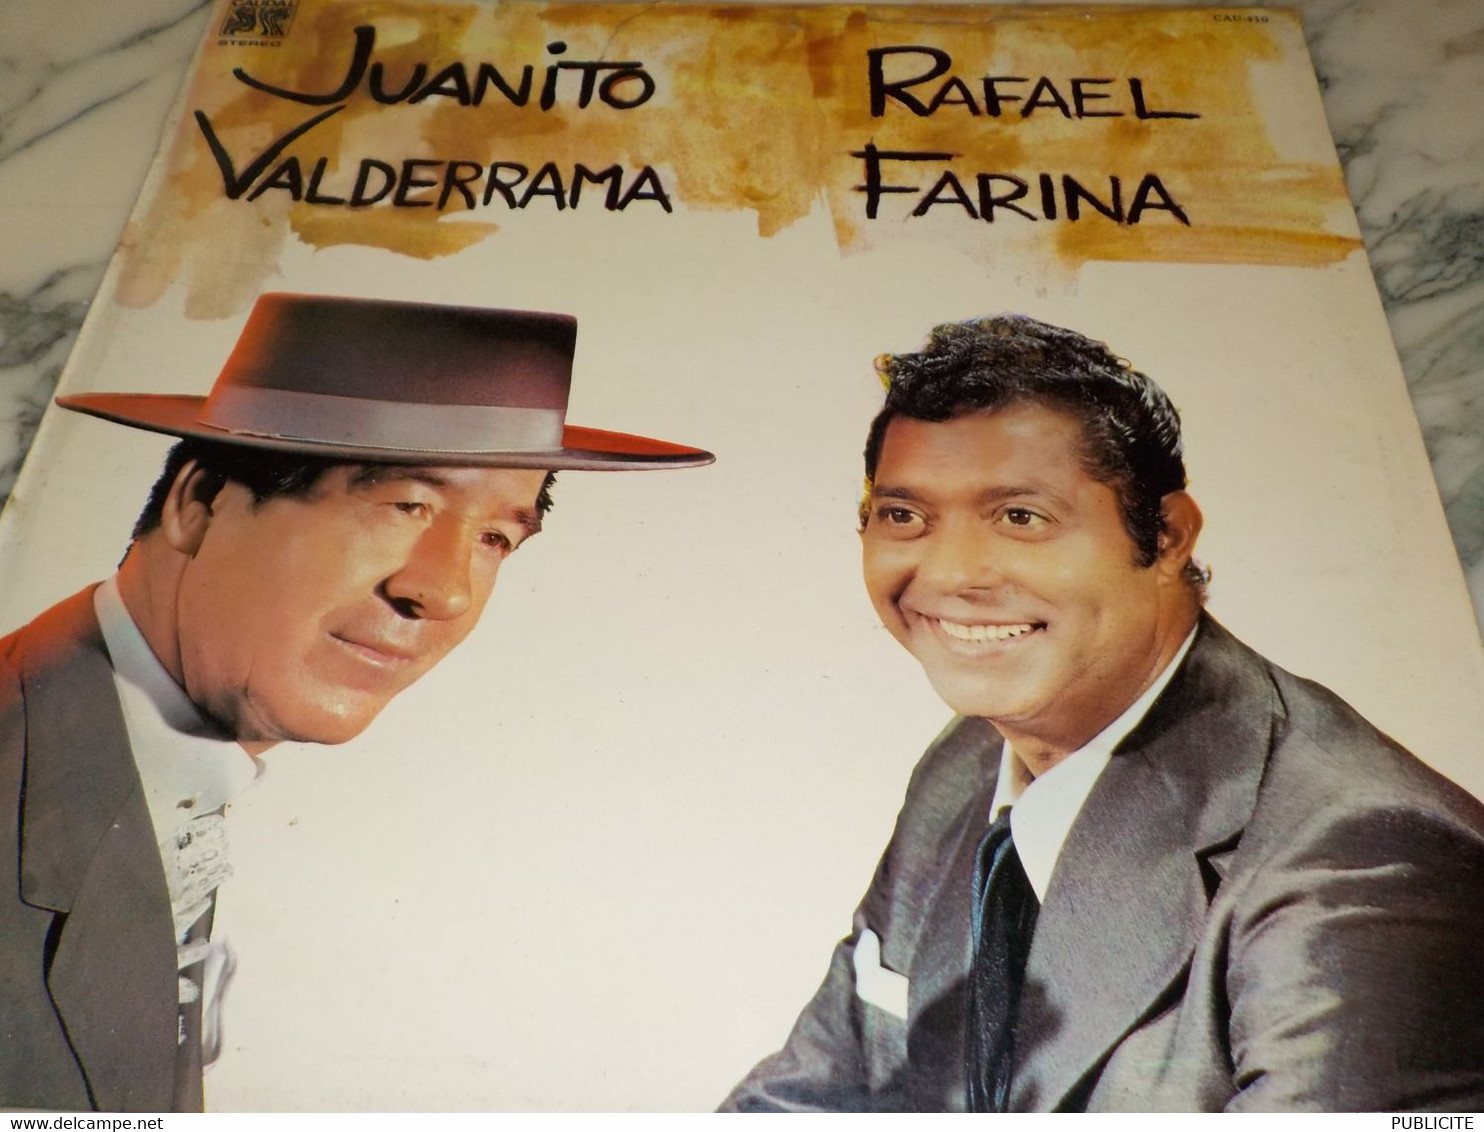 DISQUE 33 TOURS JUANITO VALDERRAMA ET RAFAEL FARINA 1976 - Other - Spanish Music